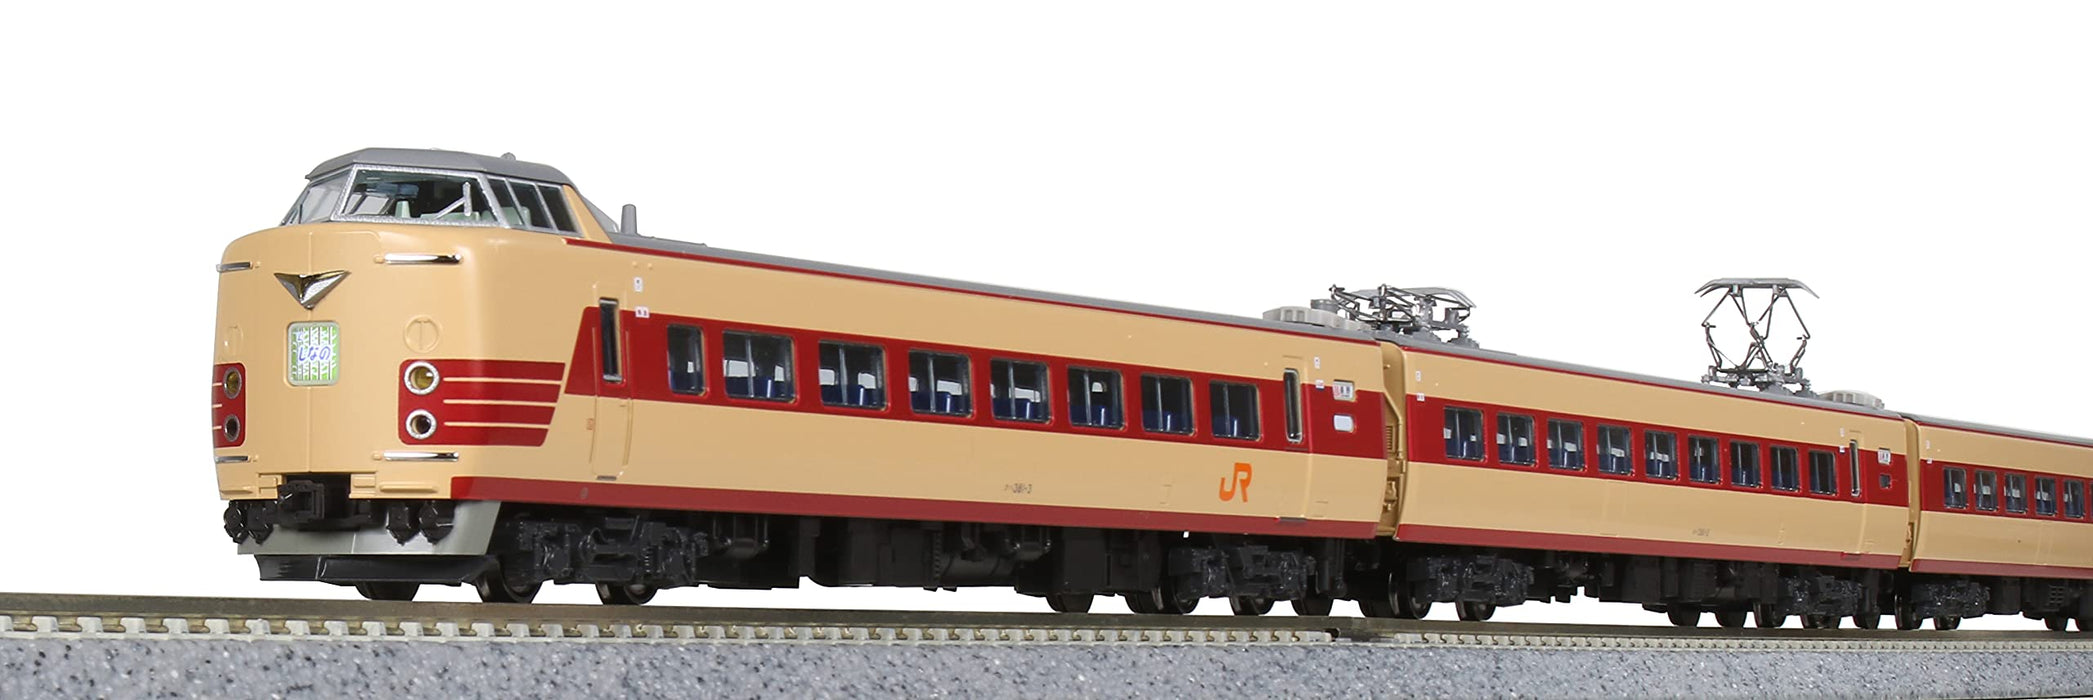 Kato Spur N 381 Panorama Shinano 3-Wagen-Set 10-1691 Eisenbahn-Modellzug